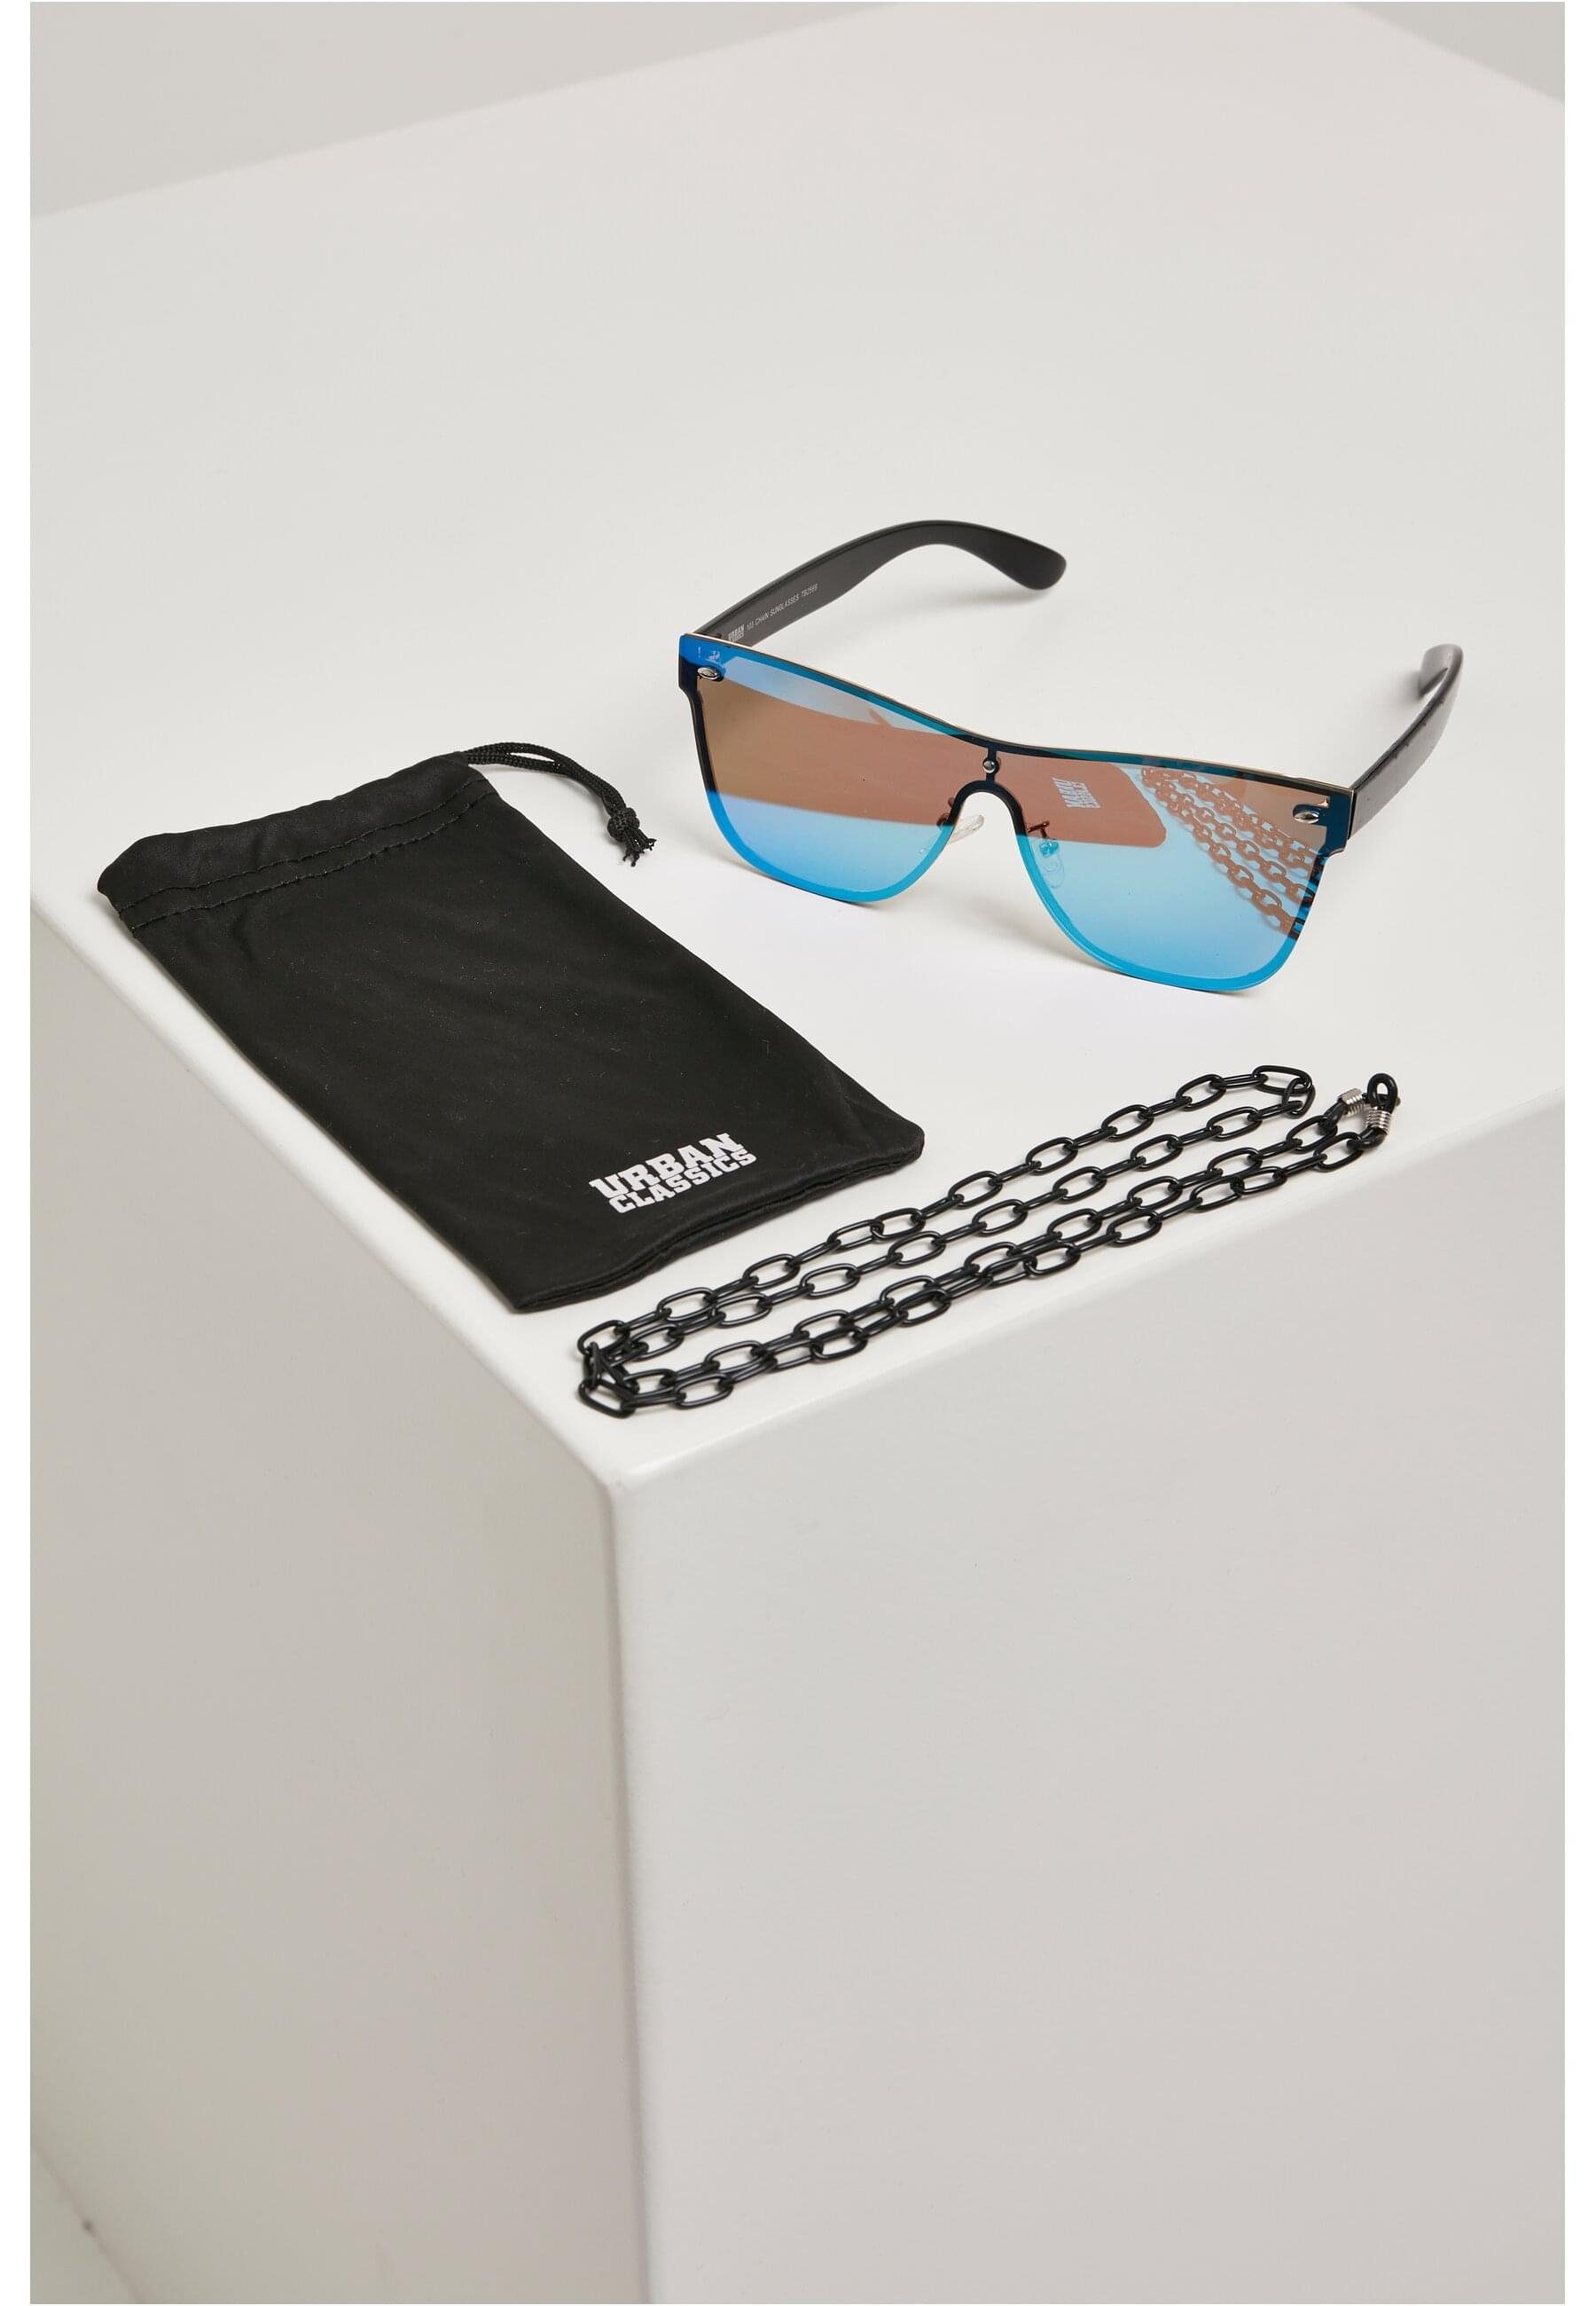 URBAN 103 Sunglasses Sonnenbrille blk/blue CLASSICS Chain Unisex